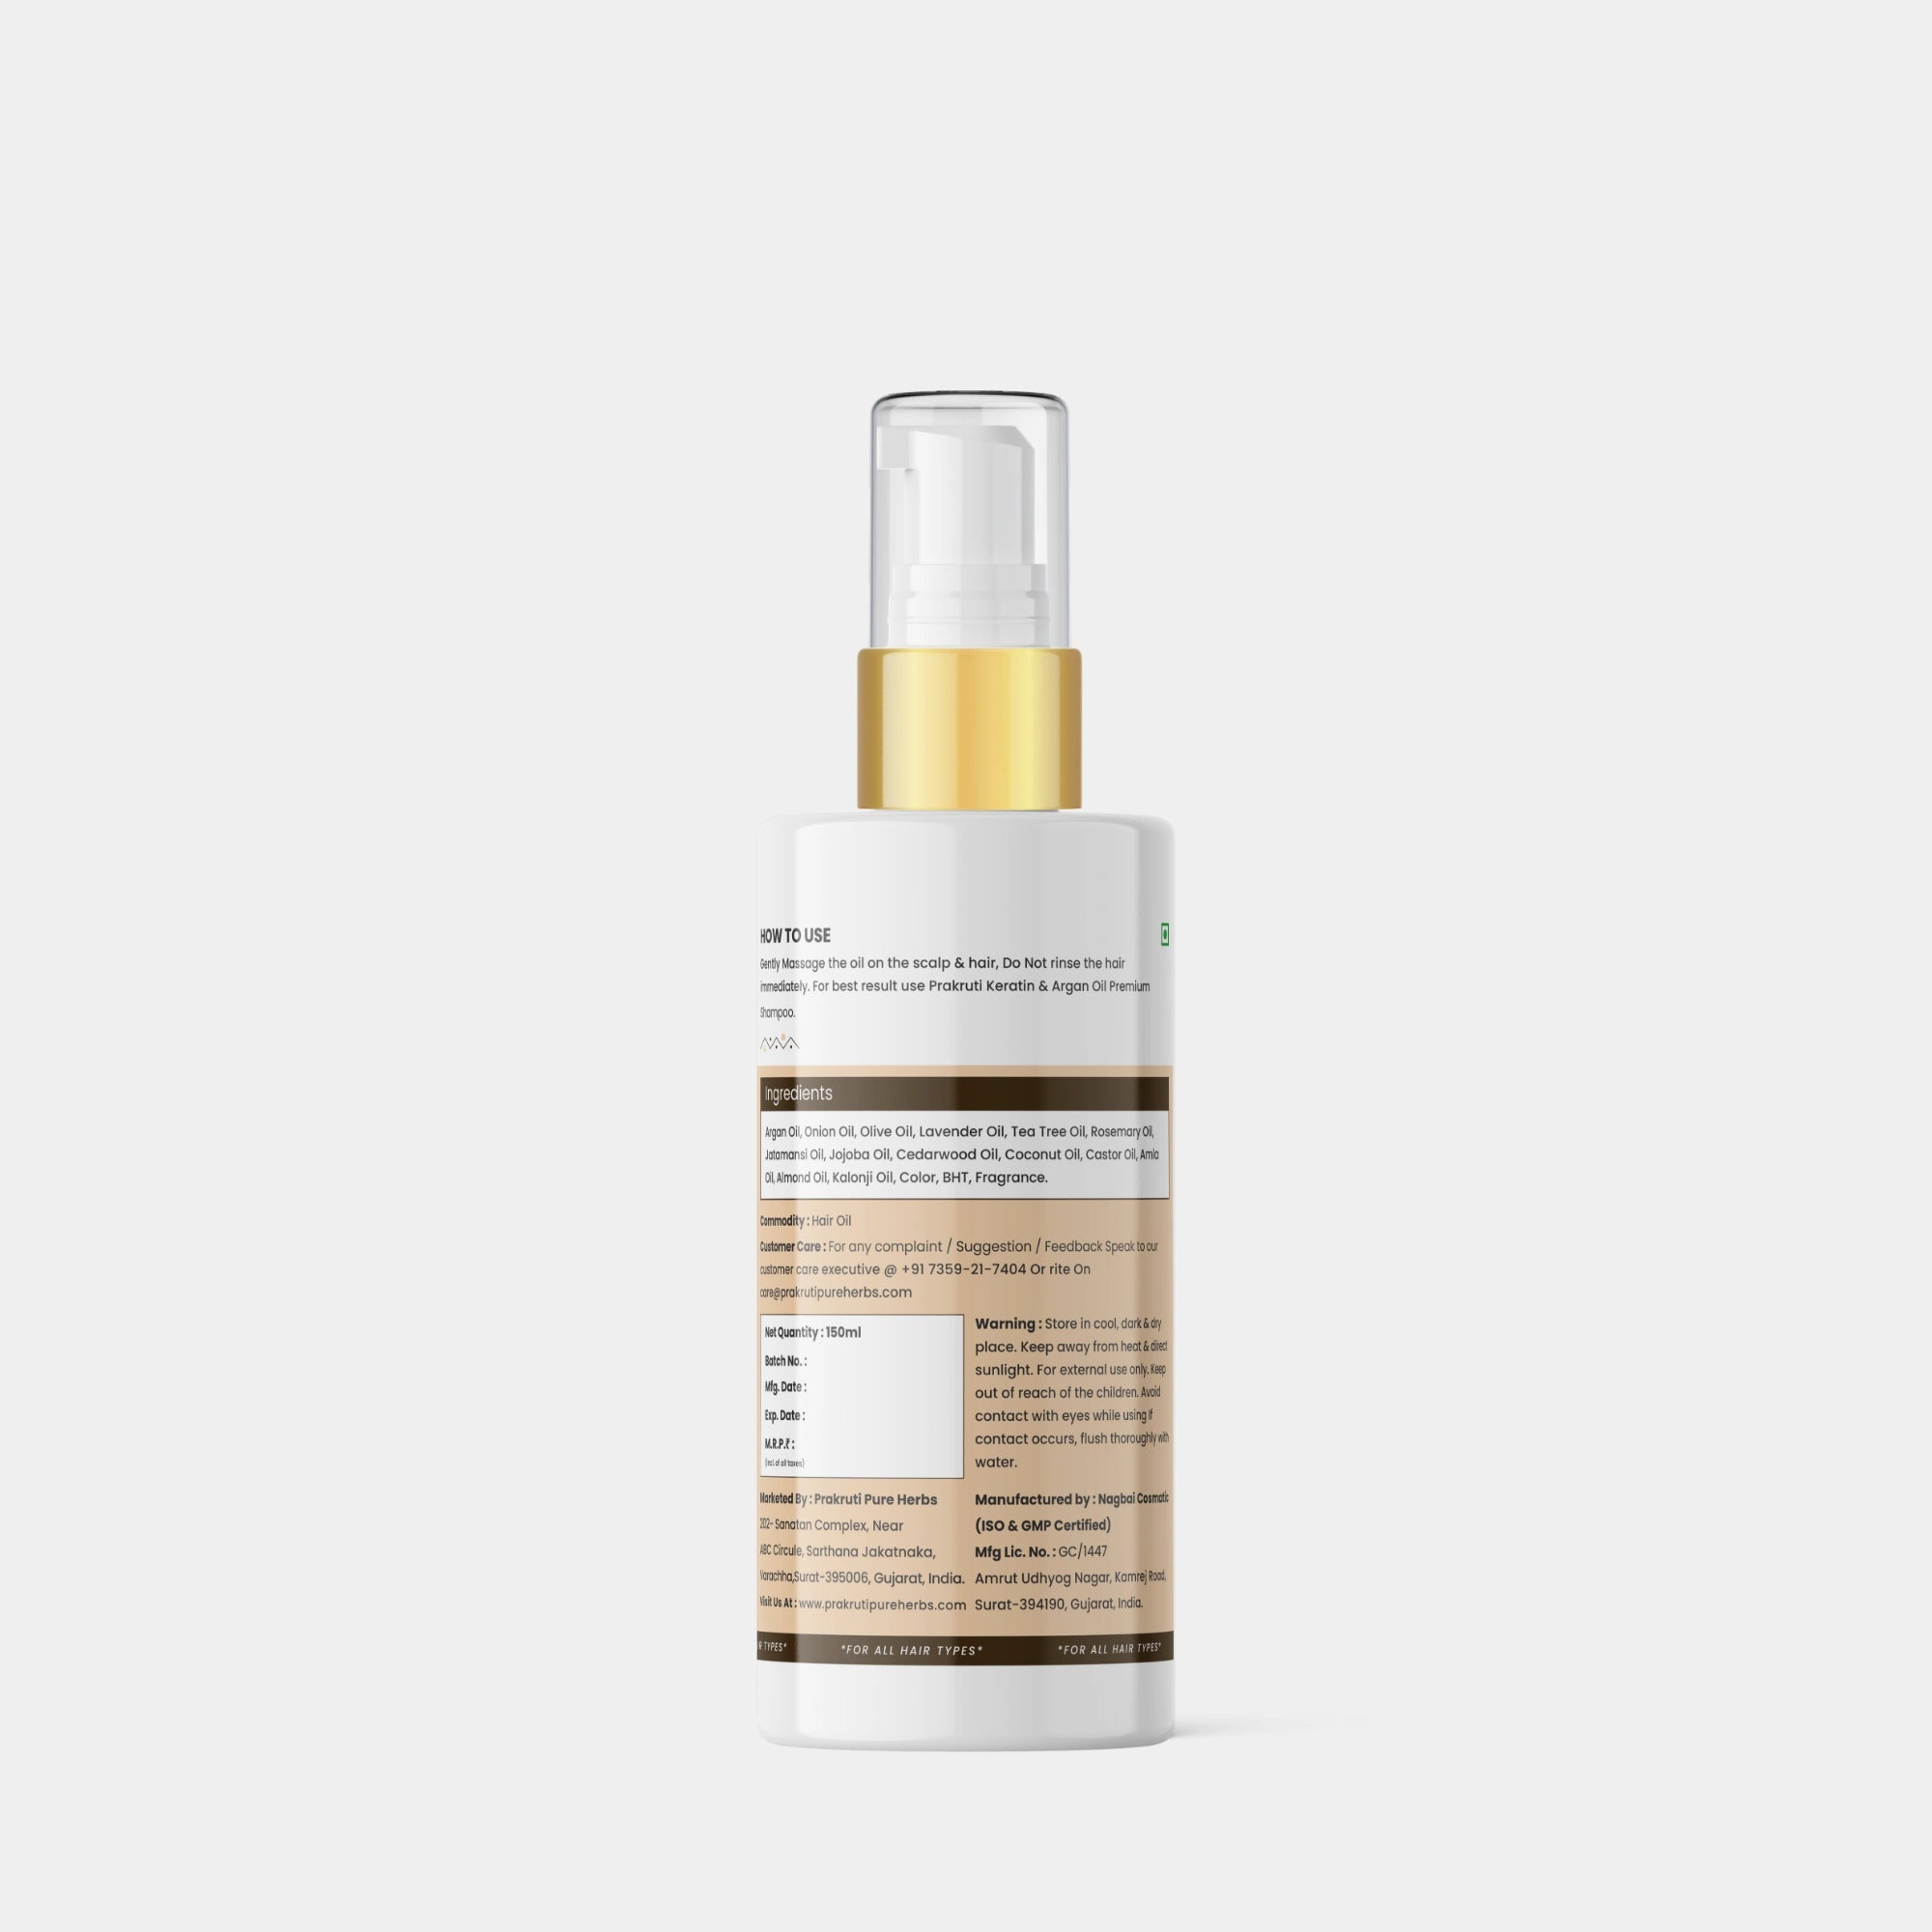 Herbal Hair Oil for Hair Growth | 150ML